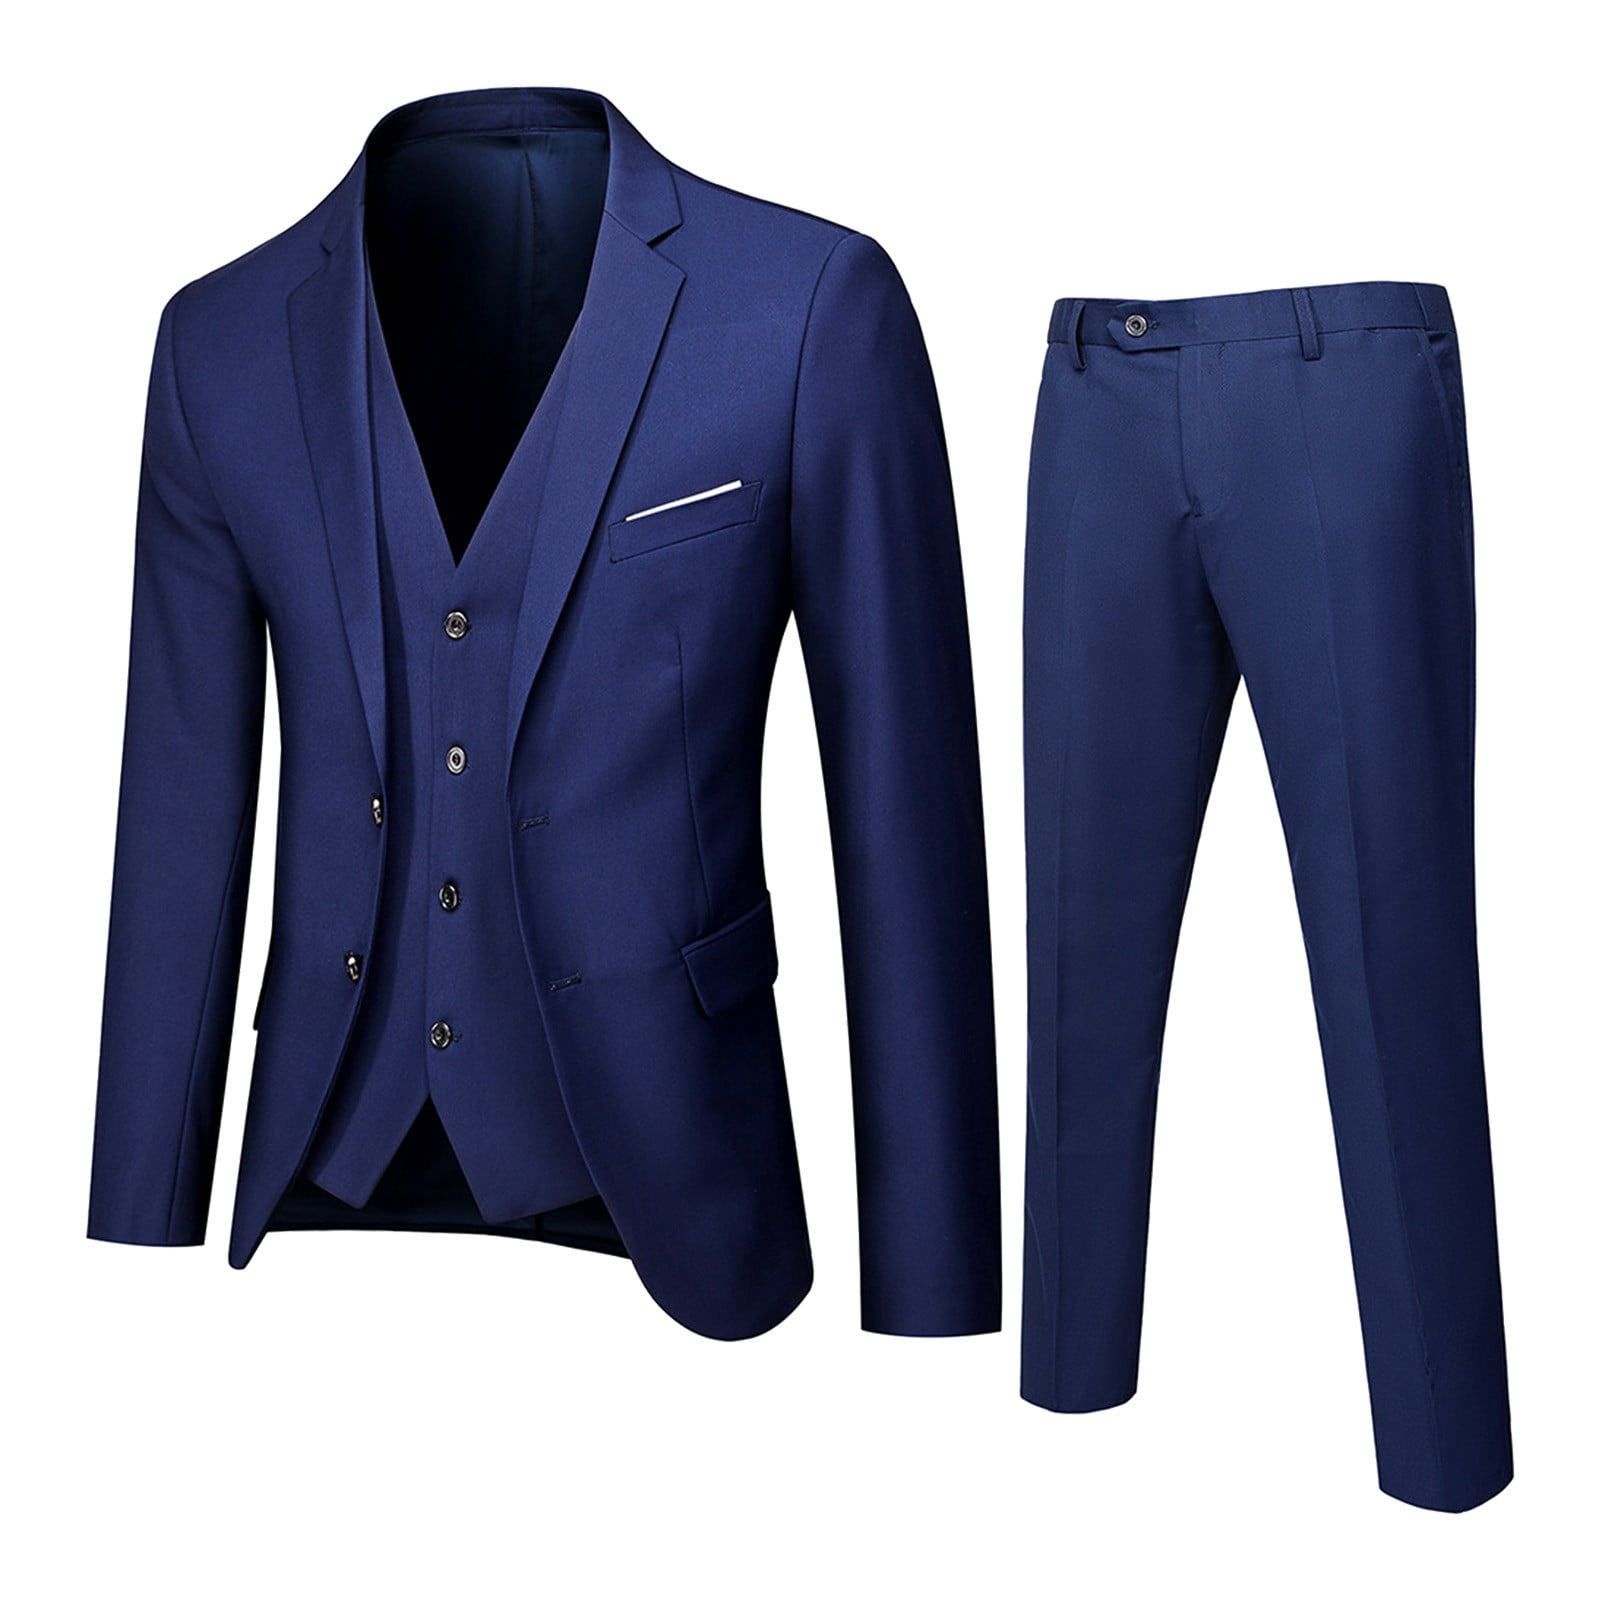 wofedyo blazer for men menâ s suit slim 3 piece suit business wedding ...